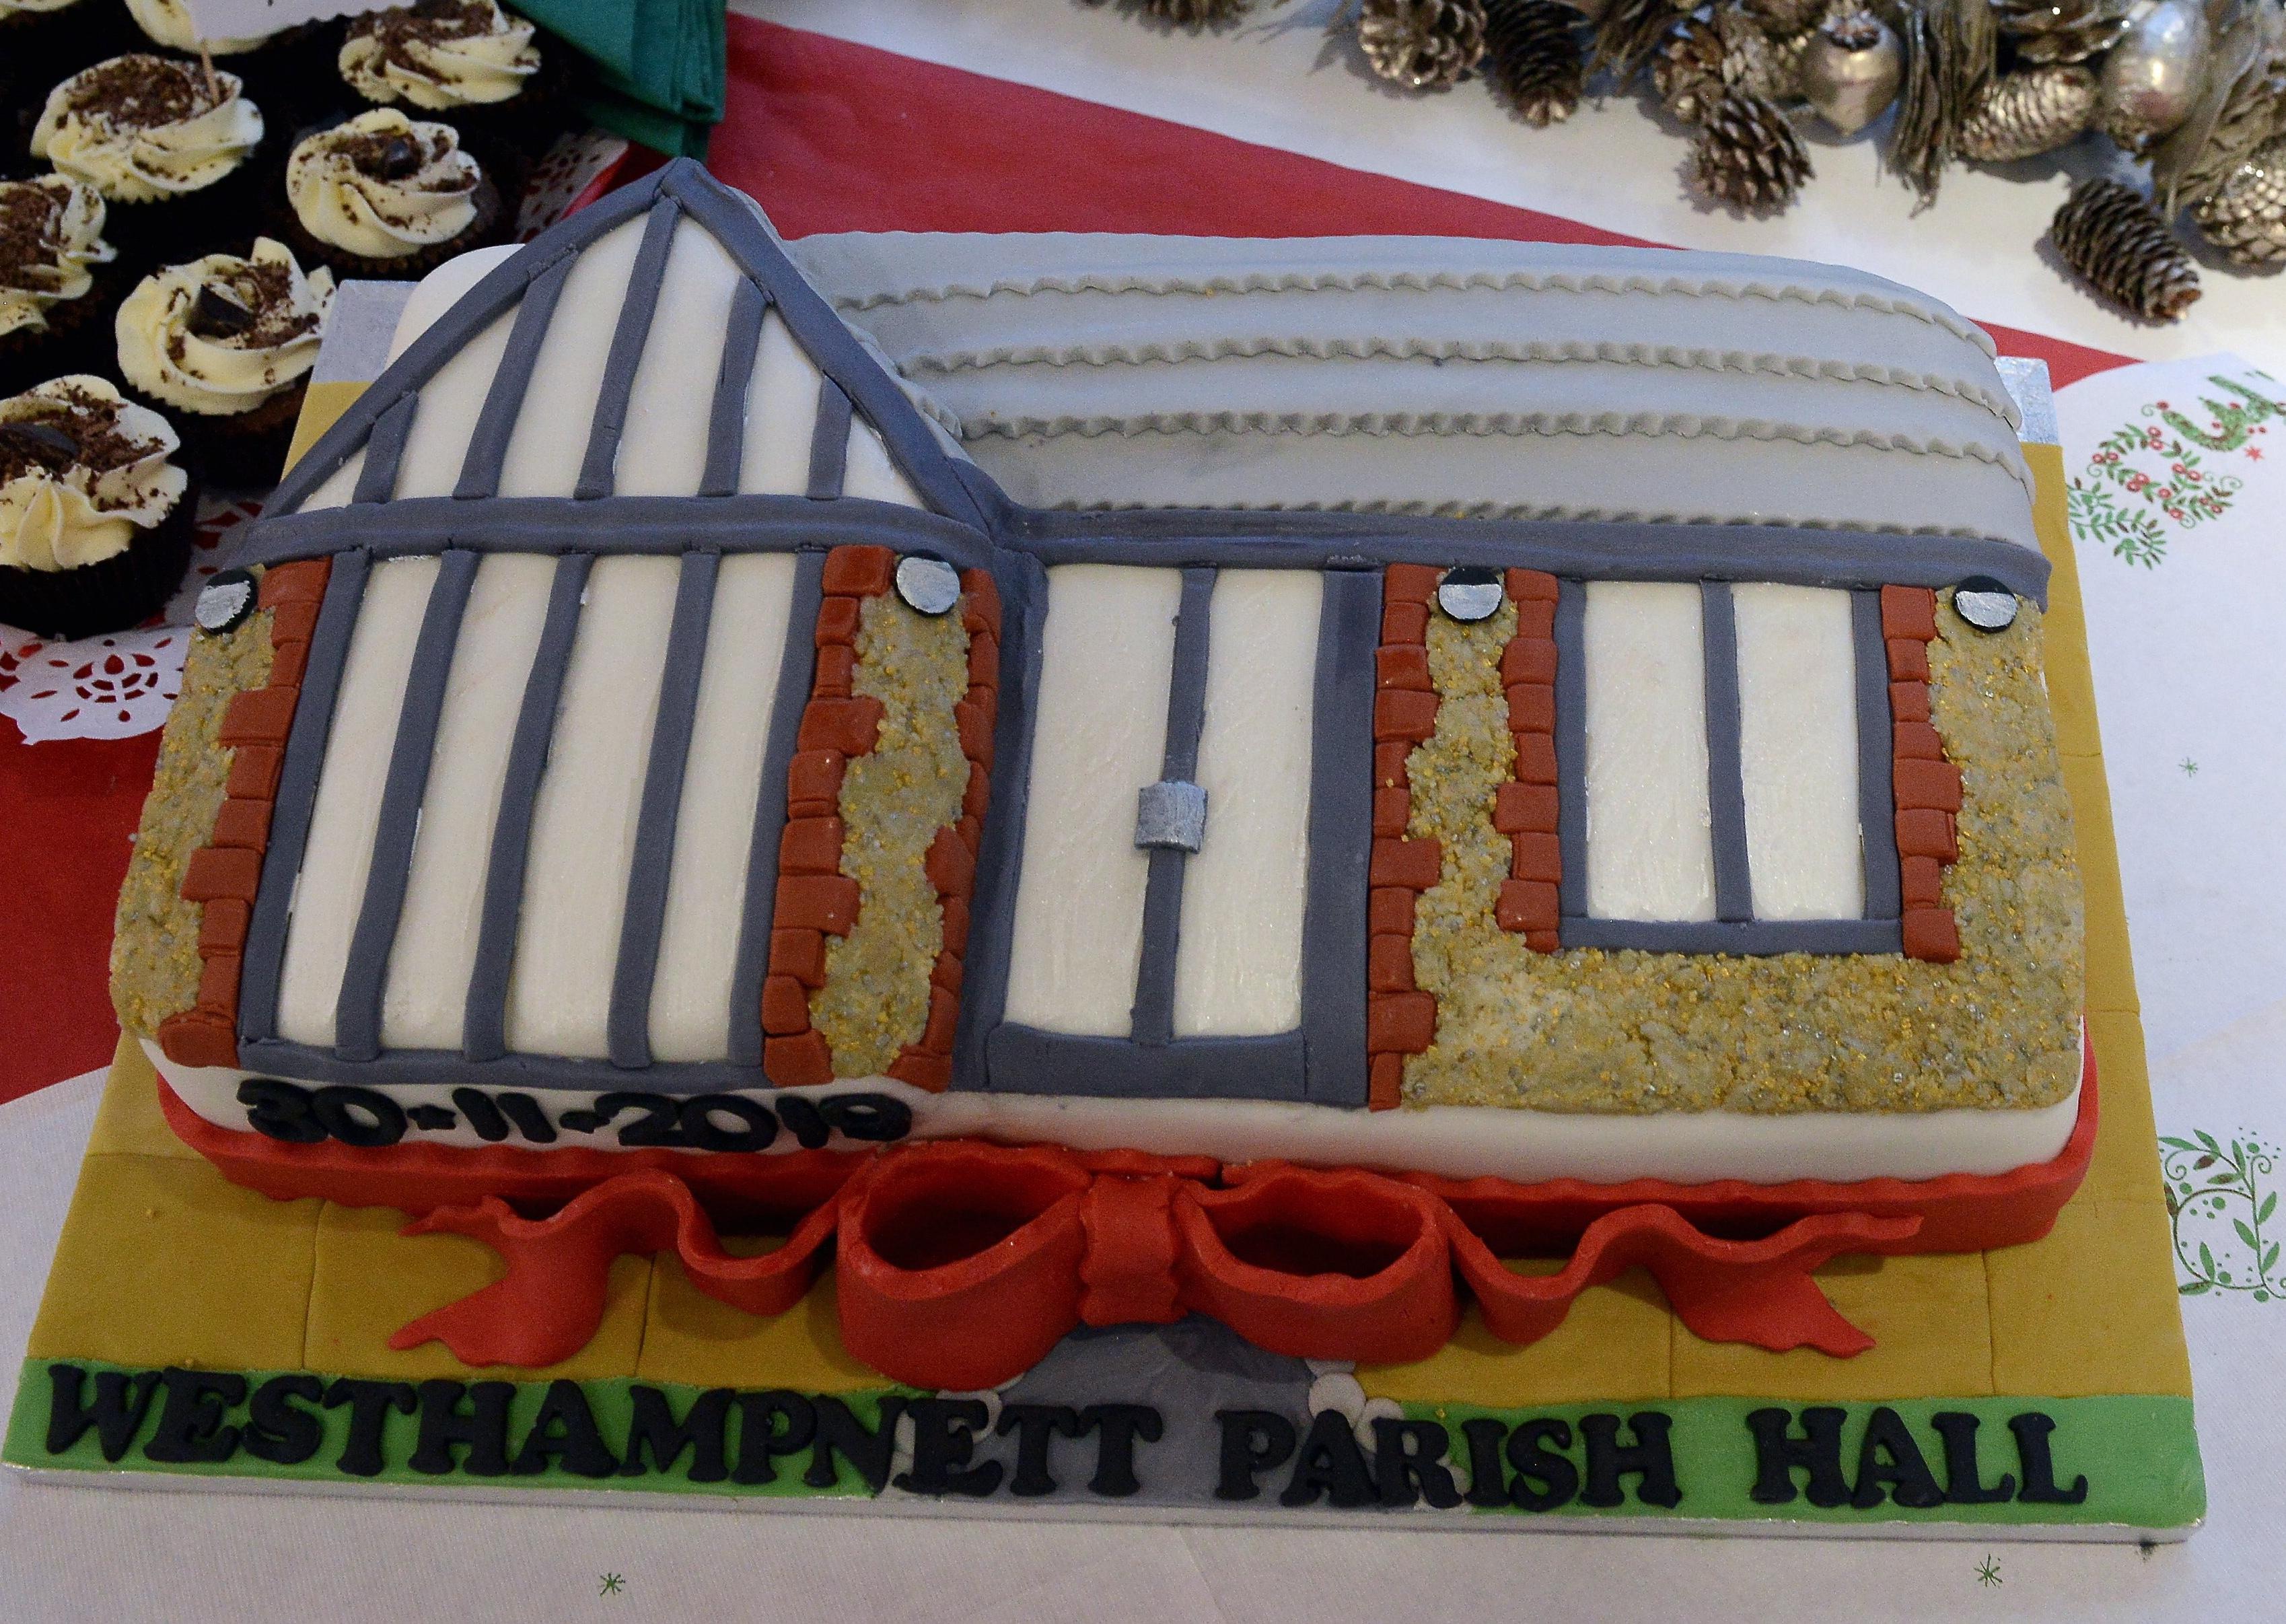 ks190651-11 Westhampnett Hall Opening  phot kate
The cake baked to celebrate the event.ks190651-11 SUS-191130-212637008